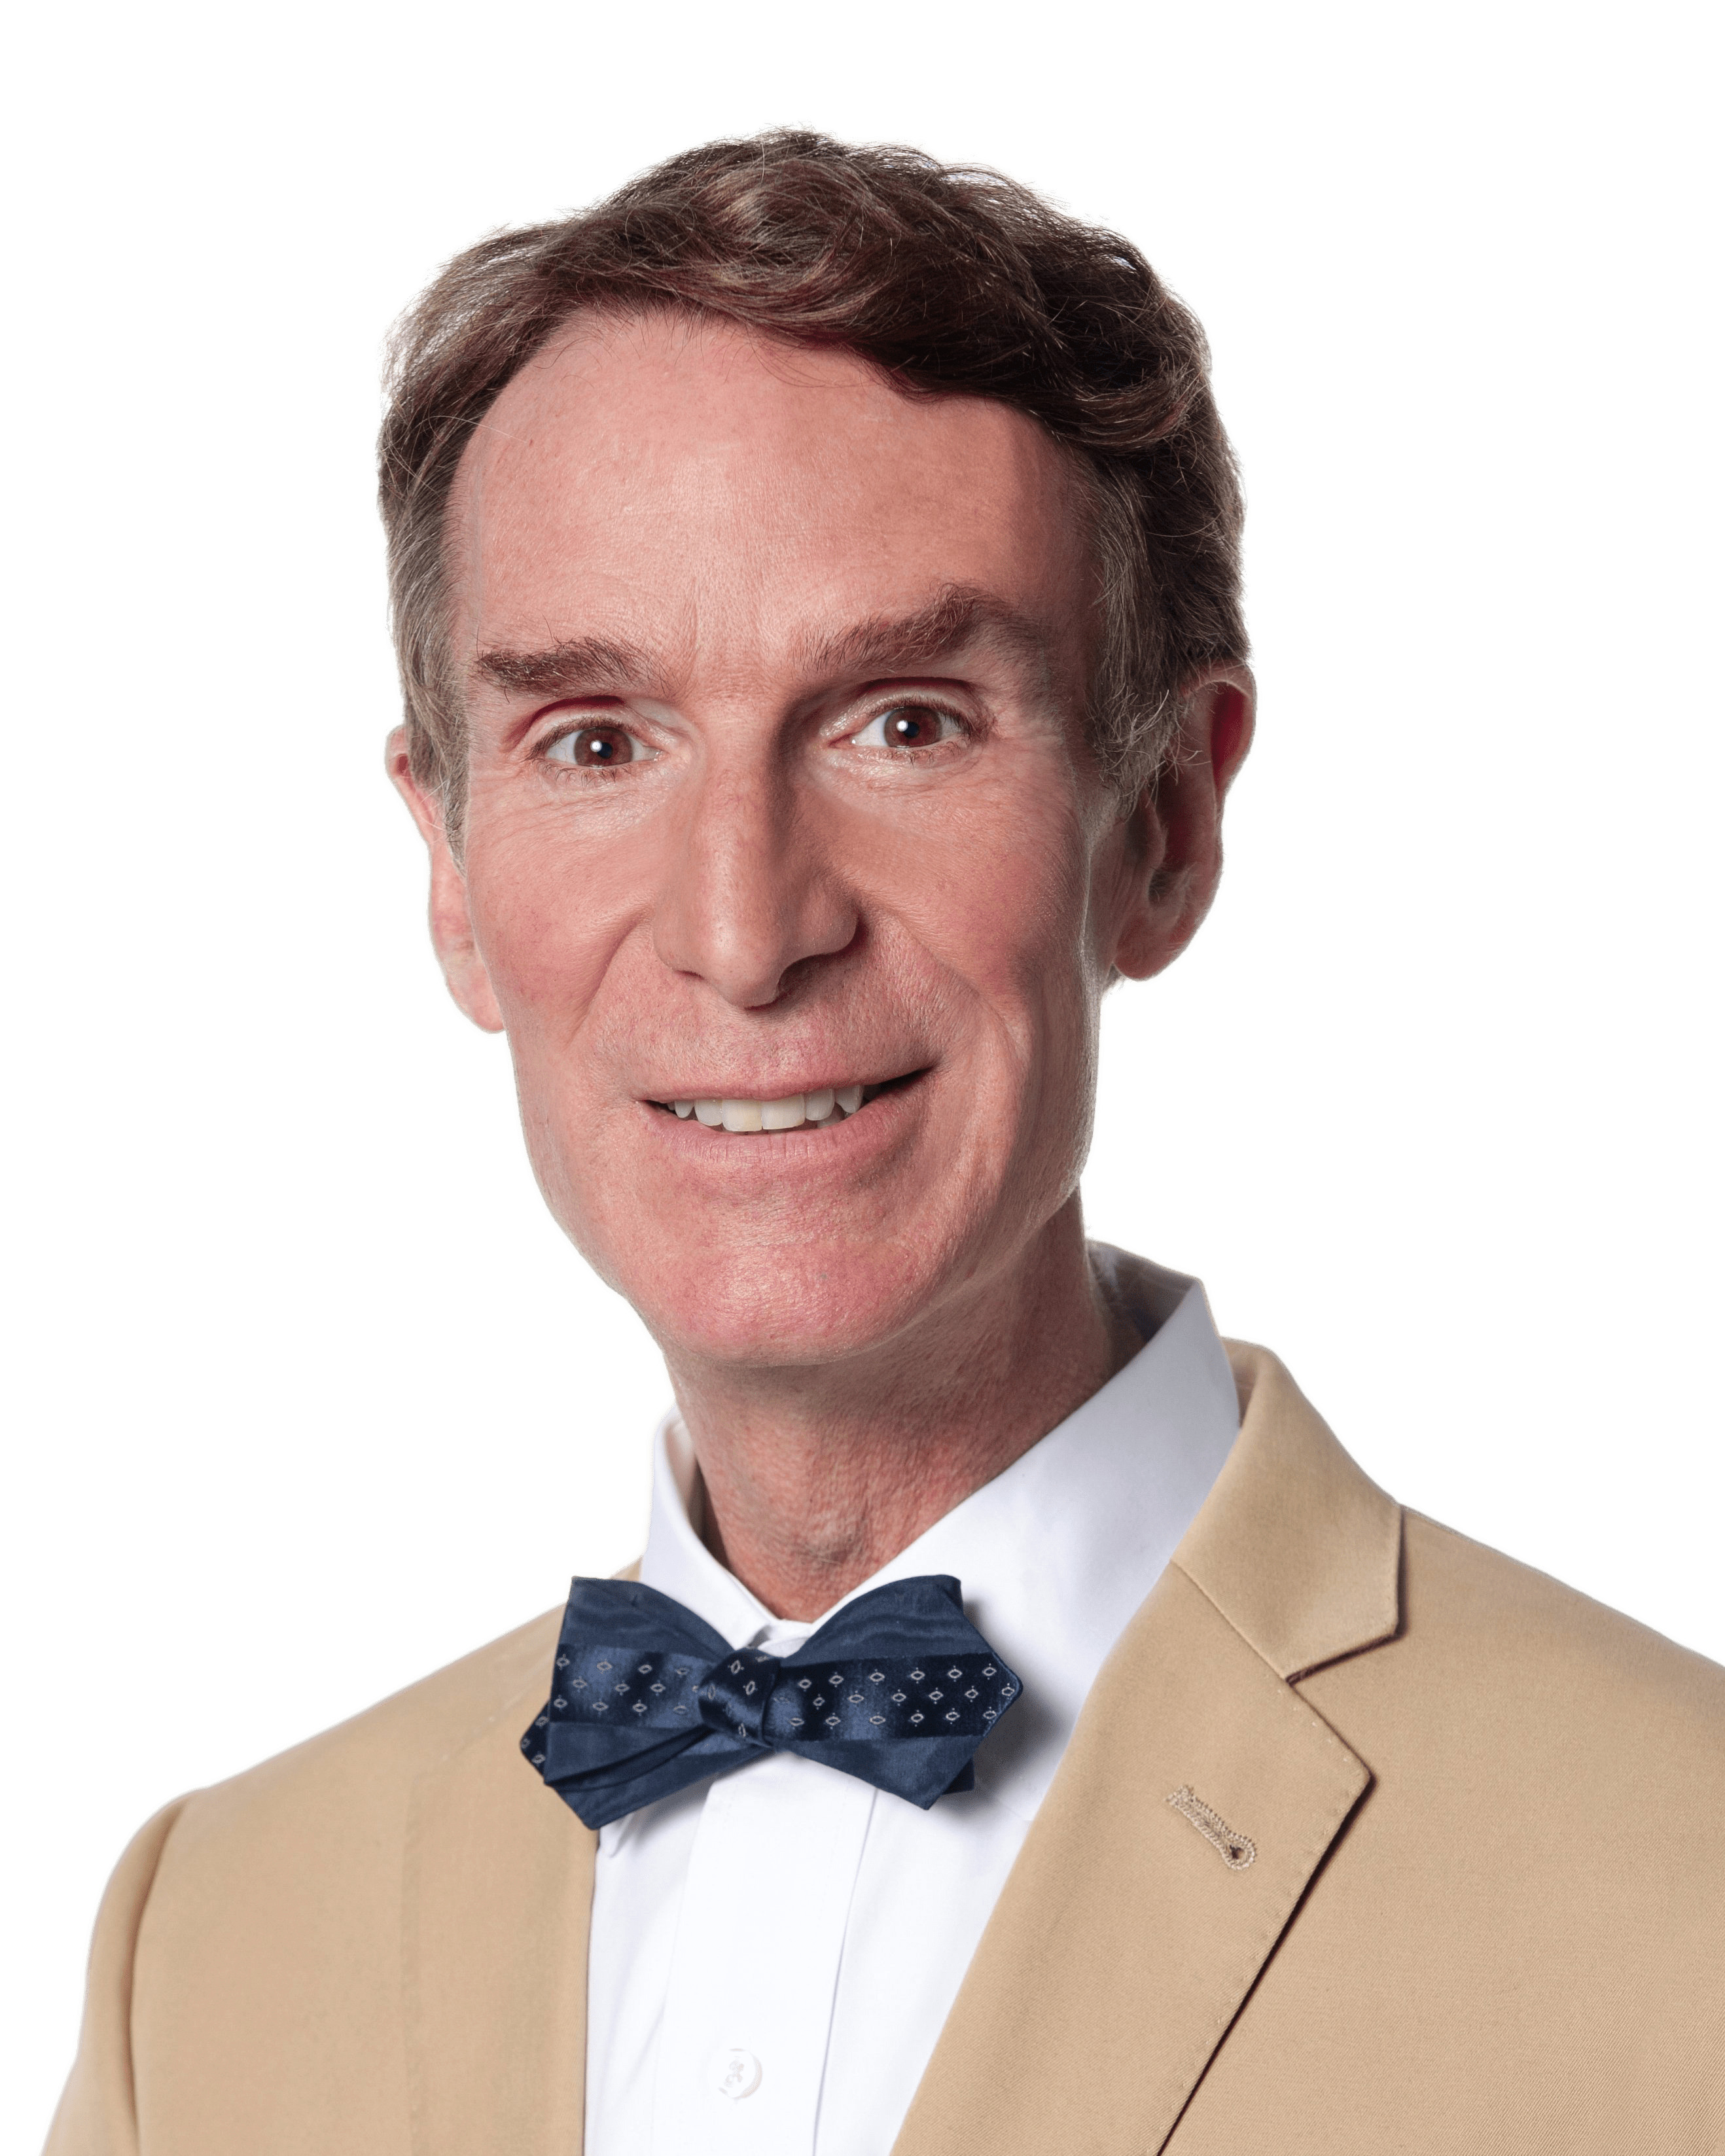 Bill Nye Portrait icons